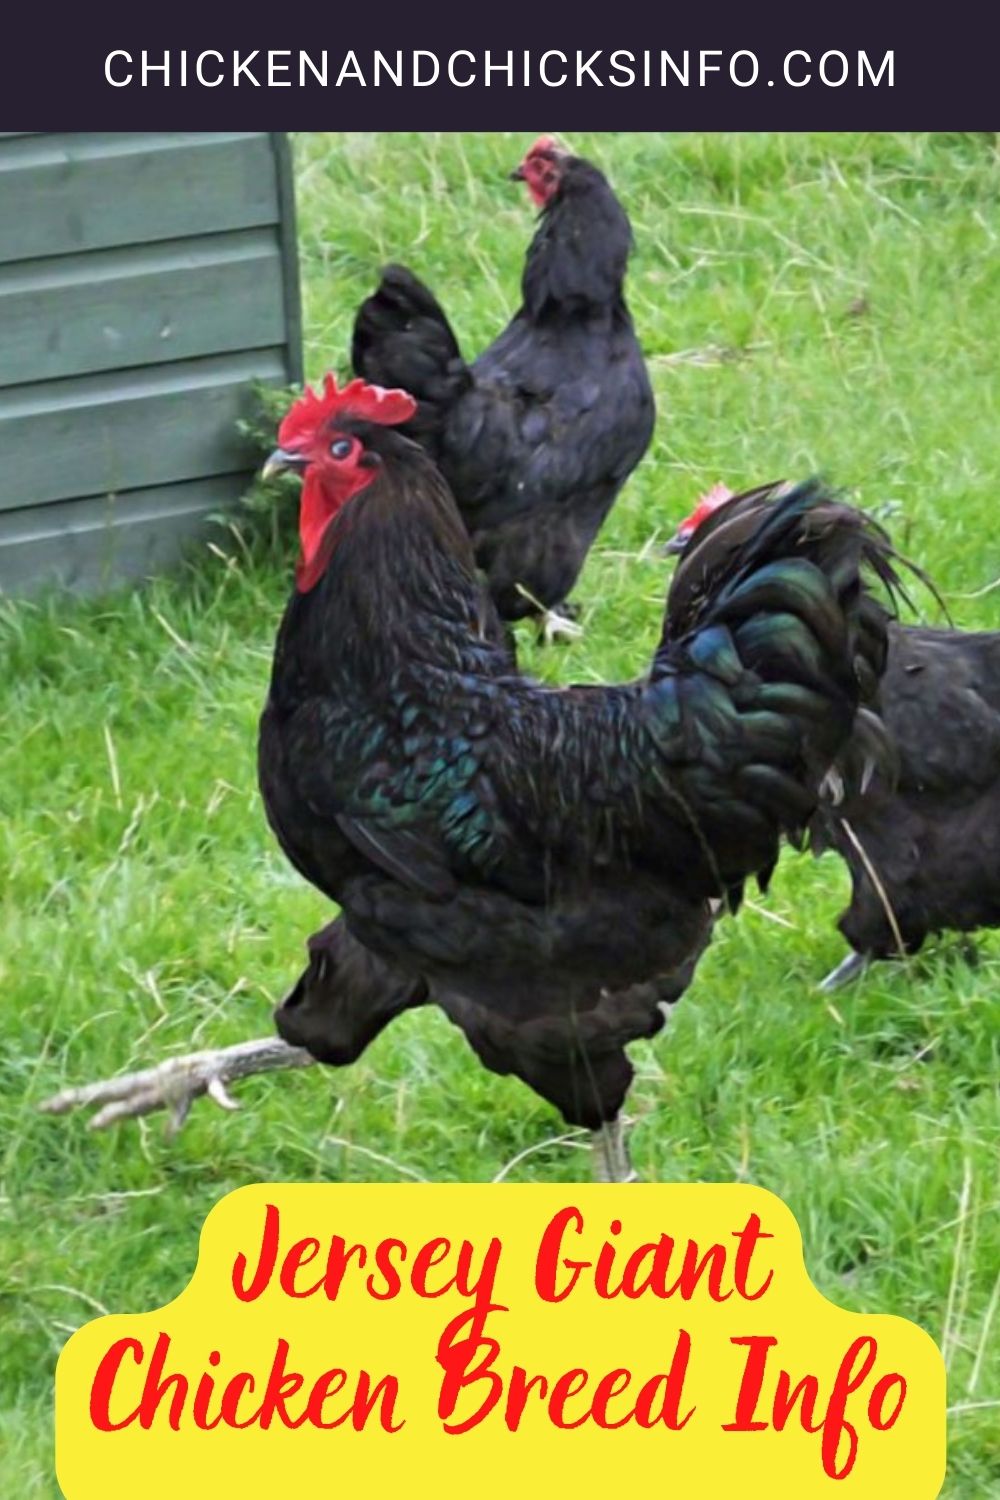 Jersey Giant Chicken Breed Info pinterest image.